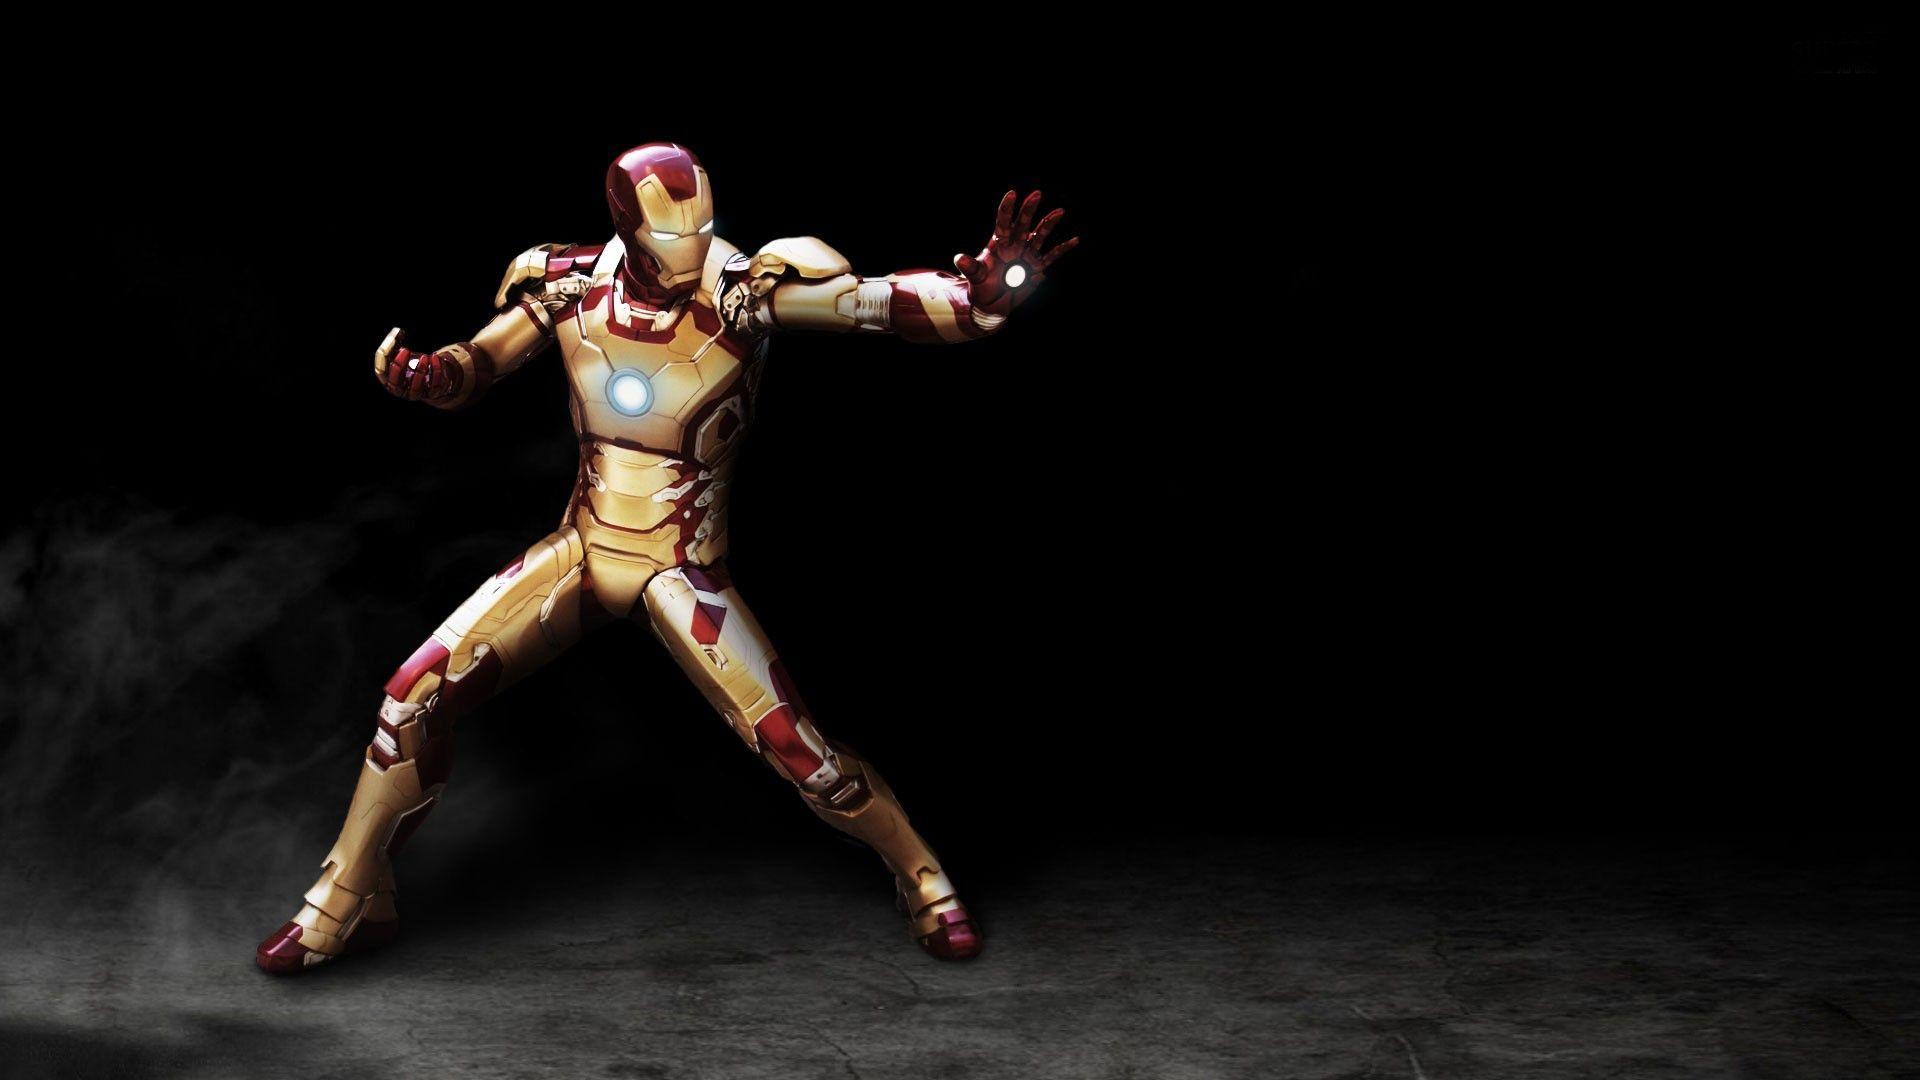 3D Iron Man Wallpaper. 3D iron man wallpaper marvel heroes photo